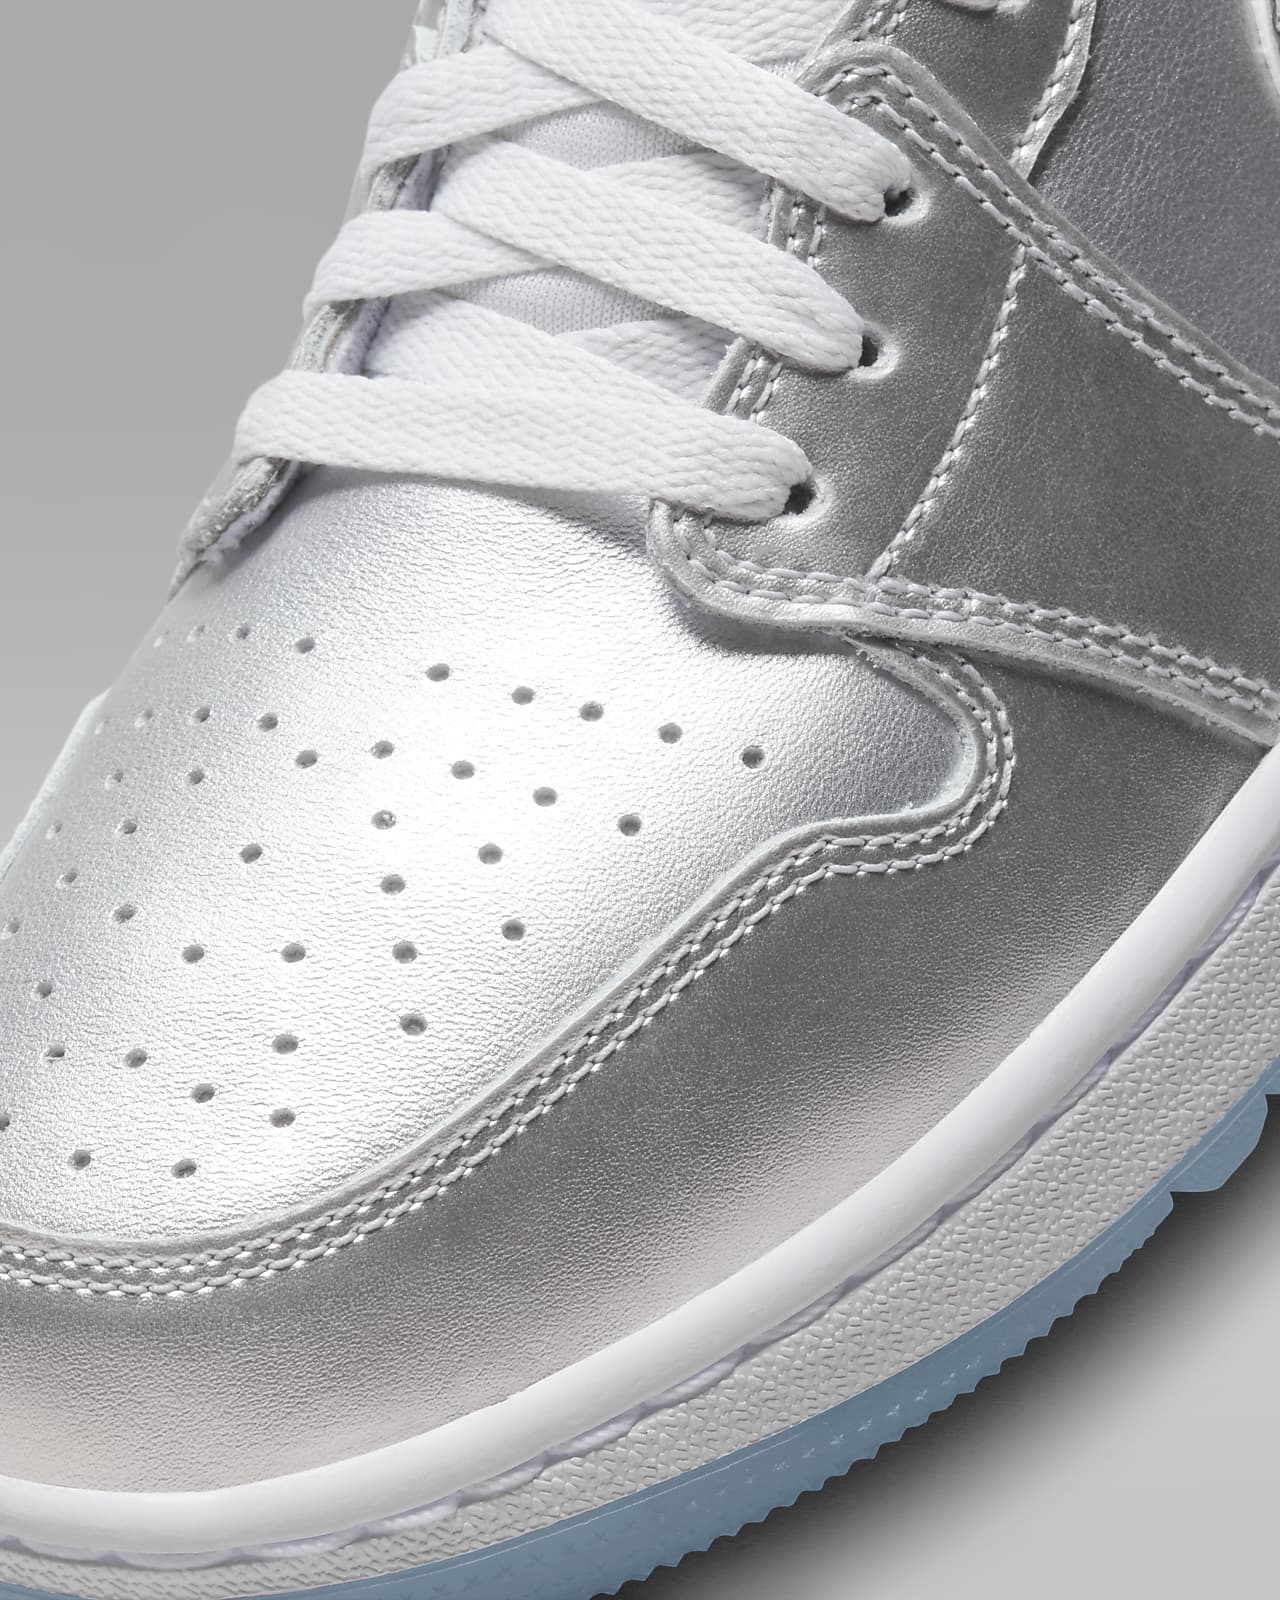 Air Jordan 1 Low G NRG Men's Golf Shoes